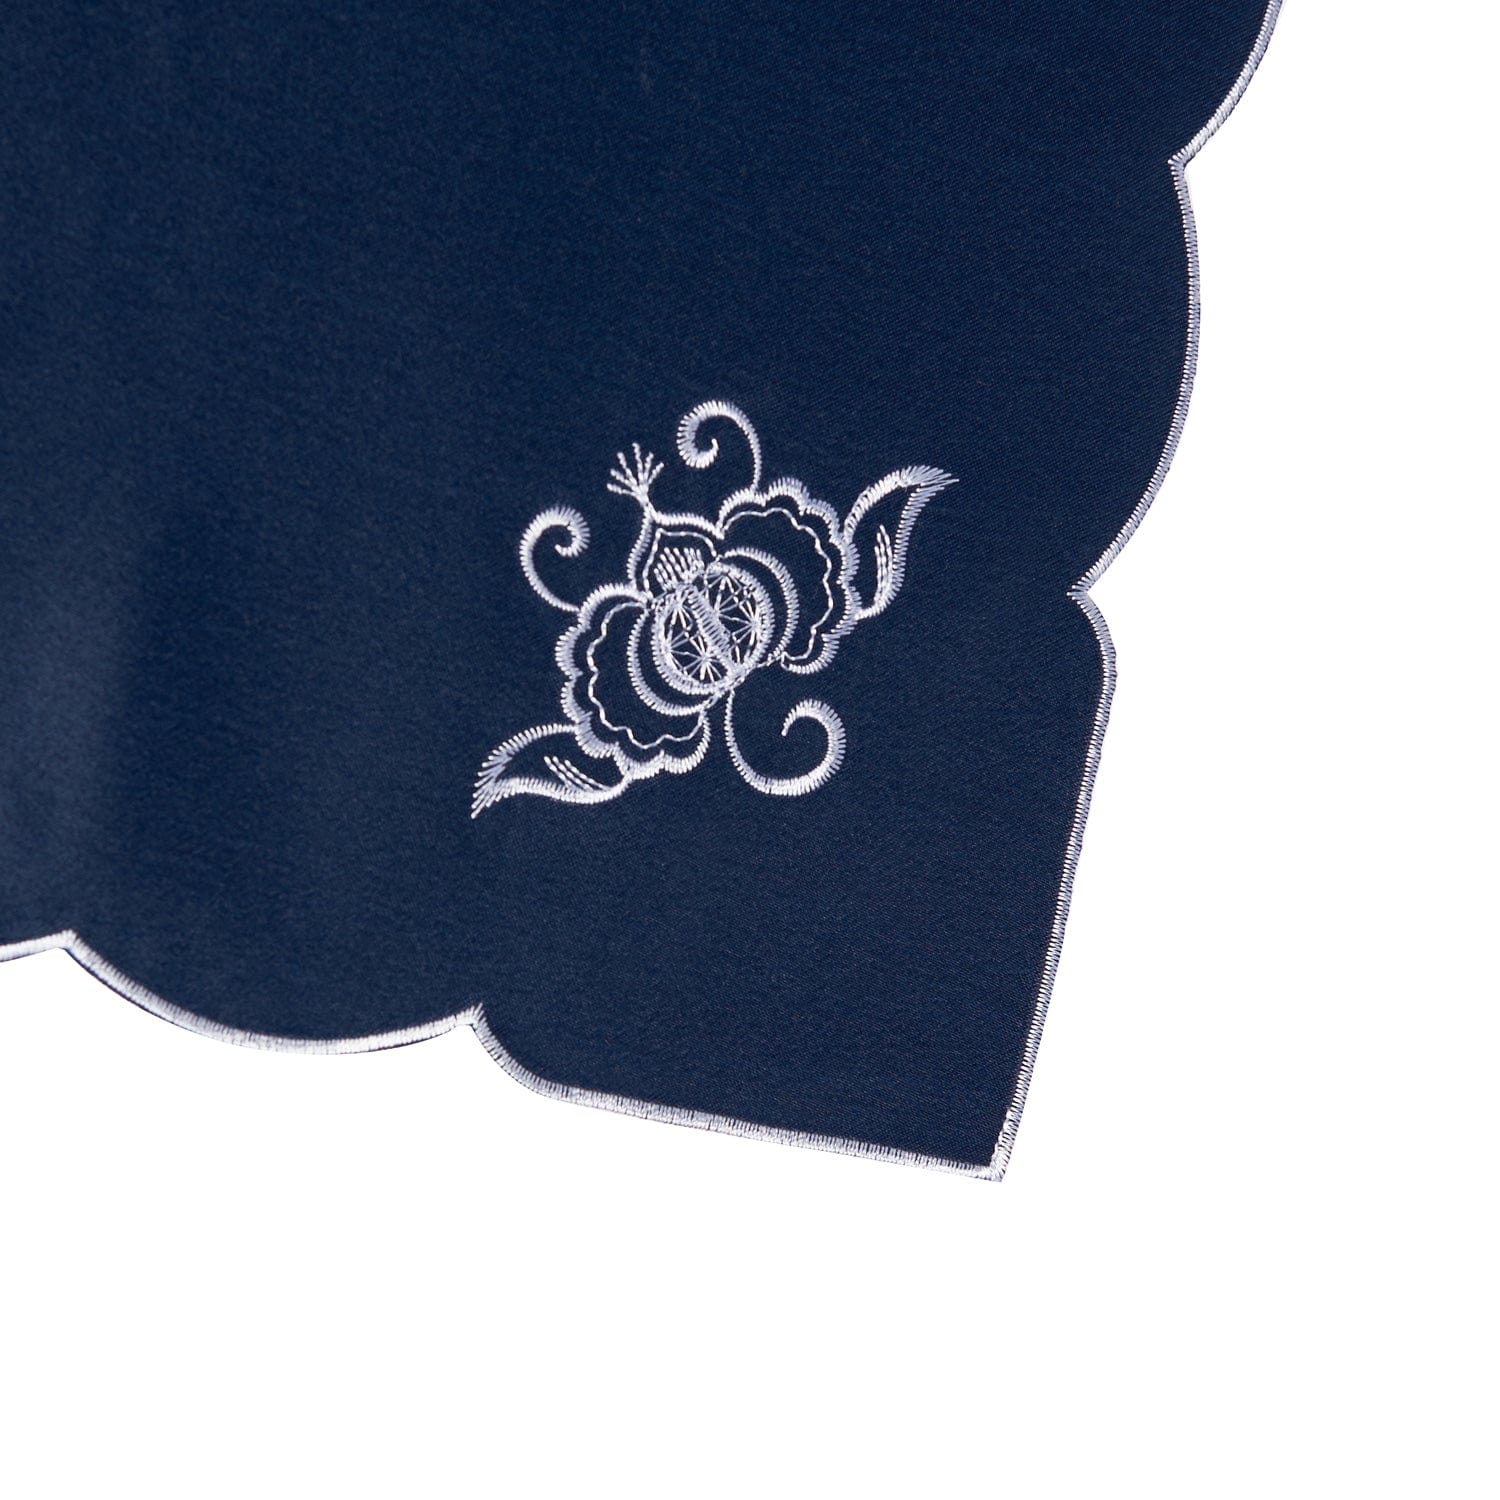 Paramount Midnight Blue Satin With White Embroidery Napkin 4Pcs Set